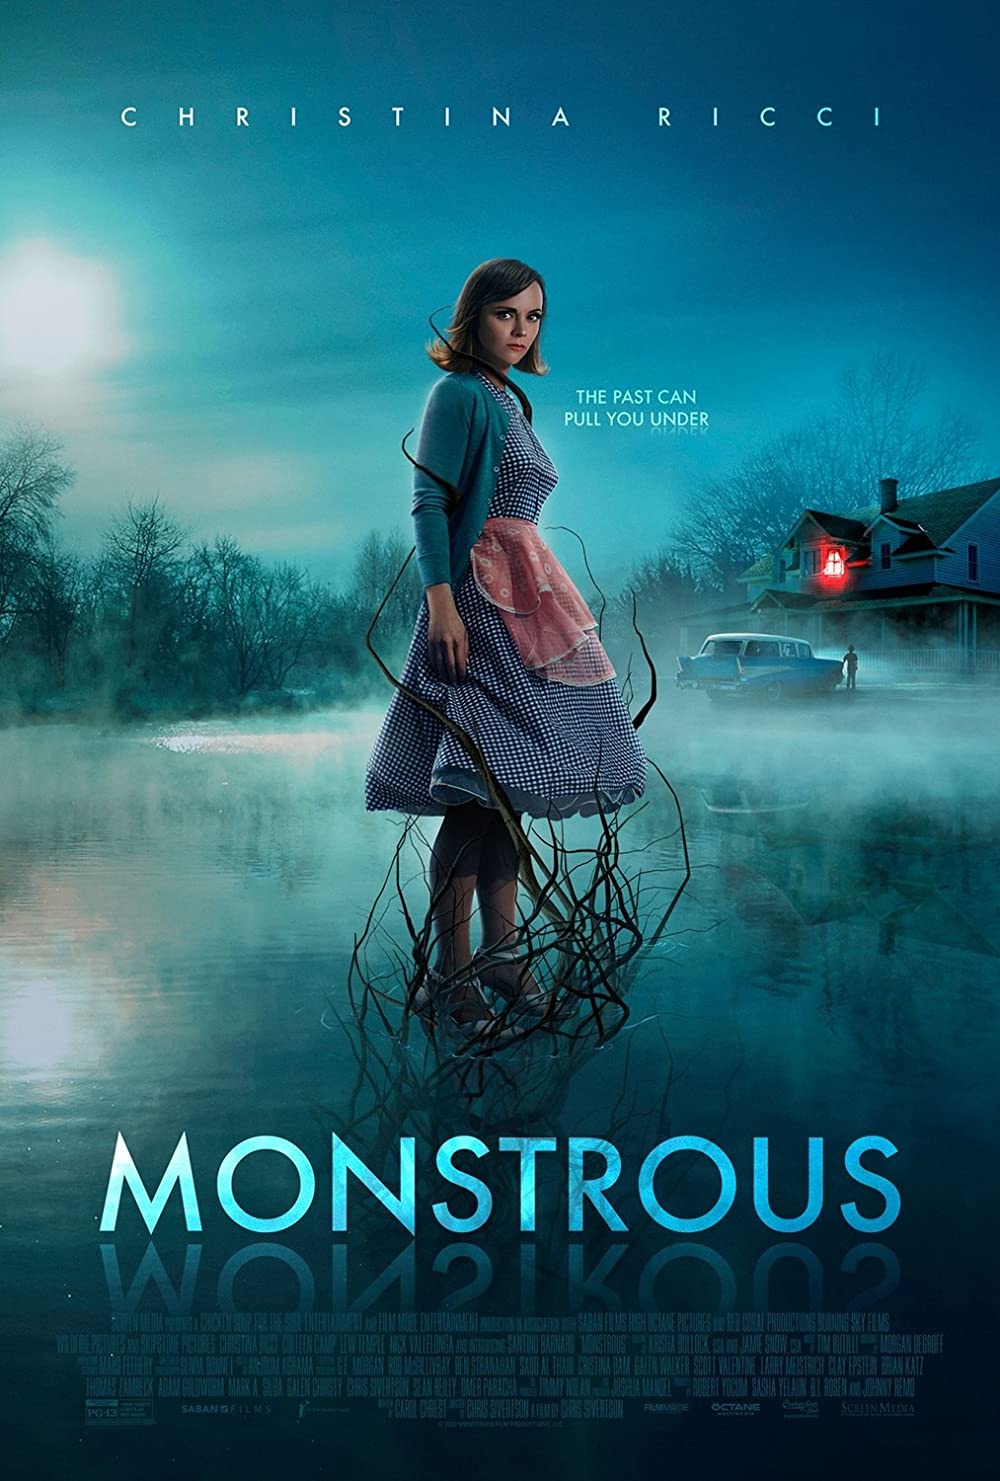 [RECENSIONE] Monstrous (Chris Sivertson)